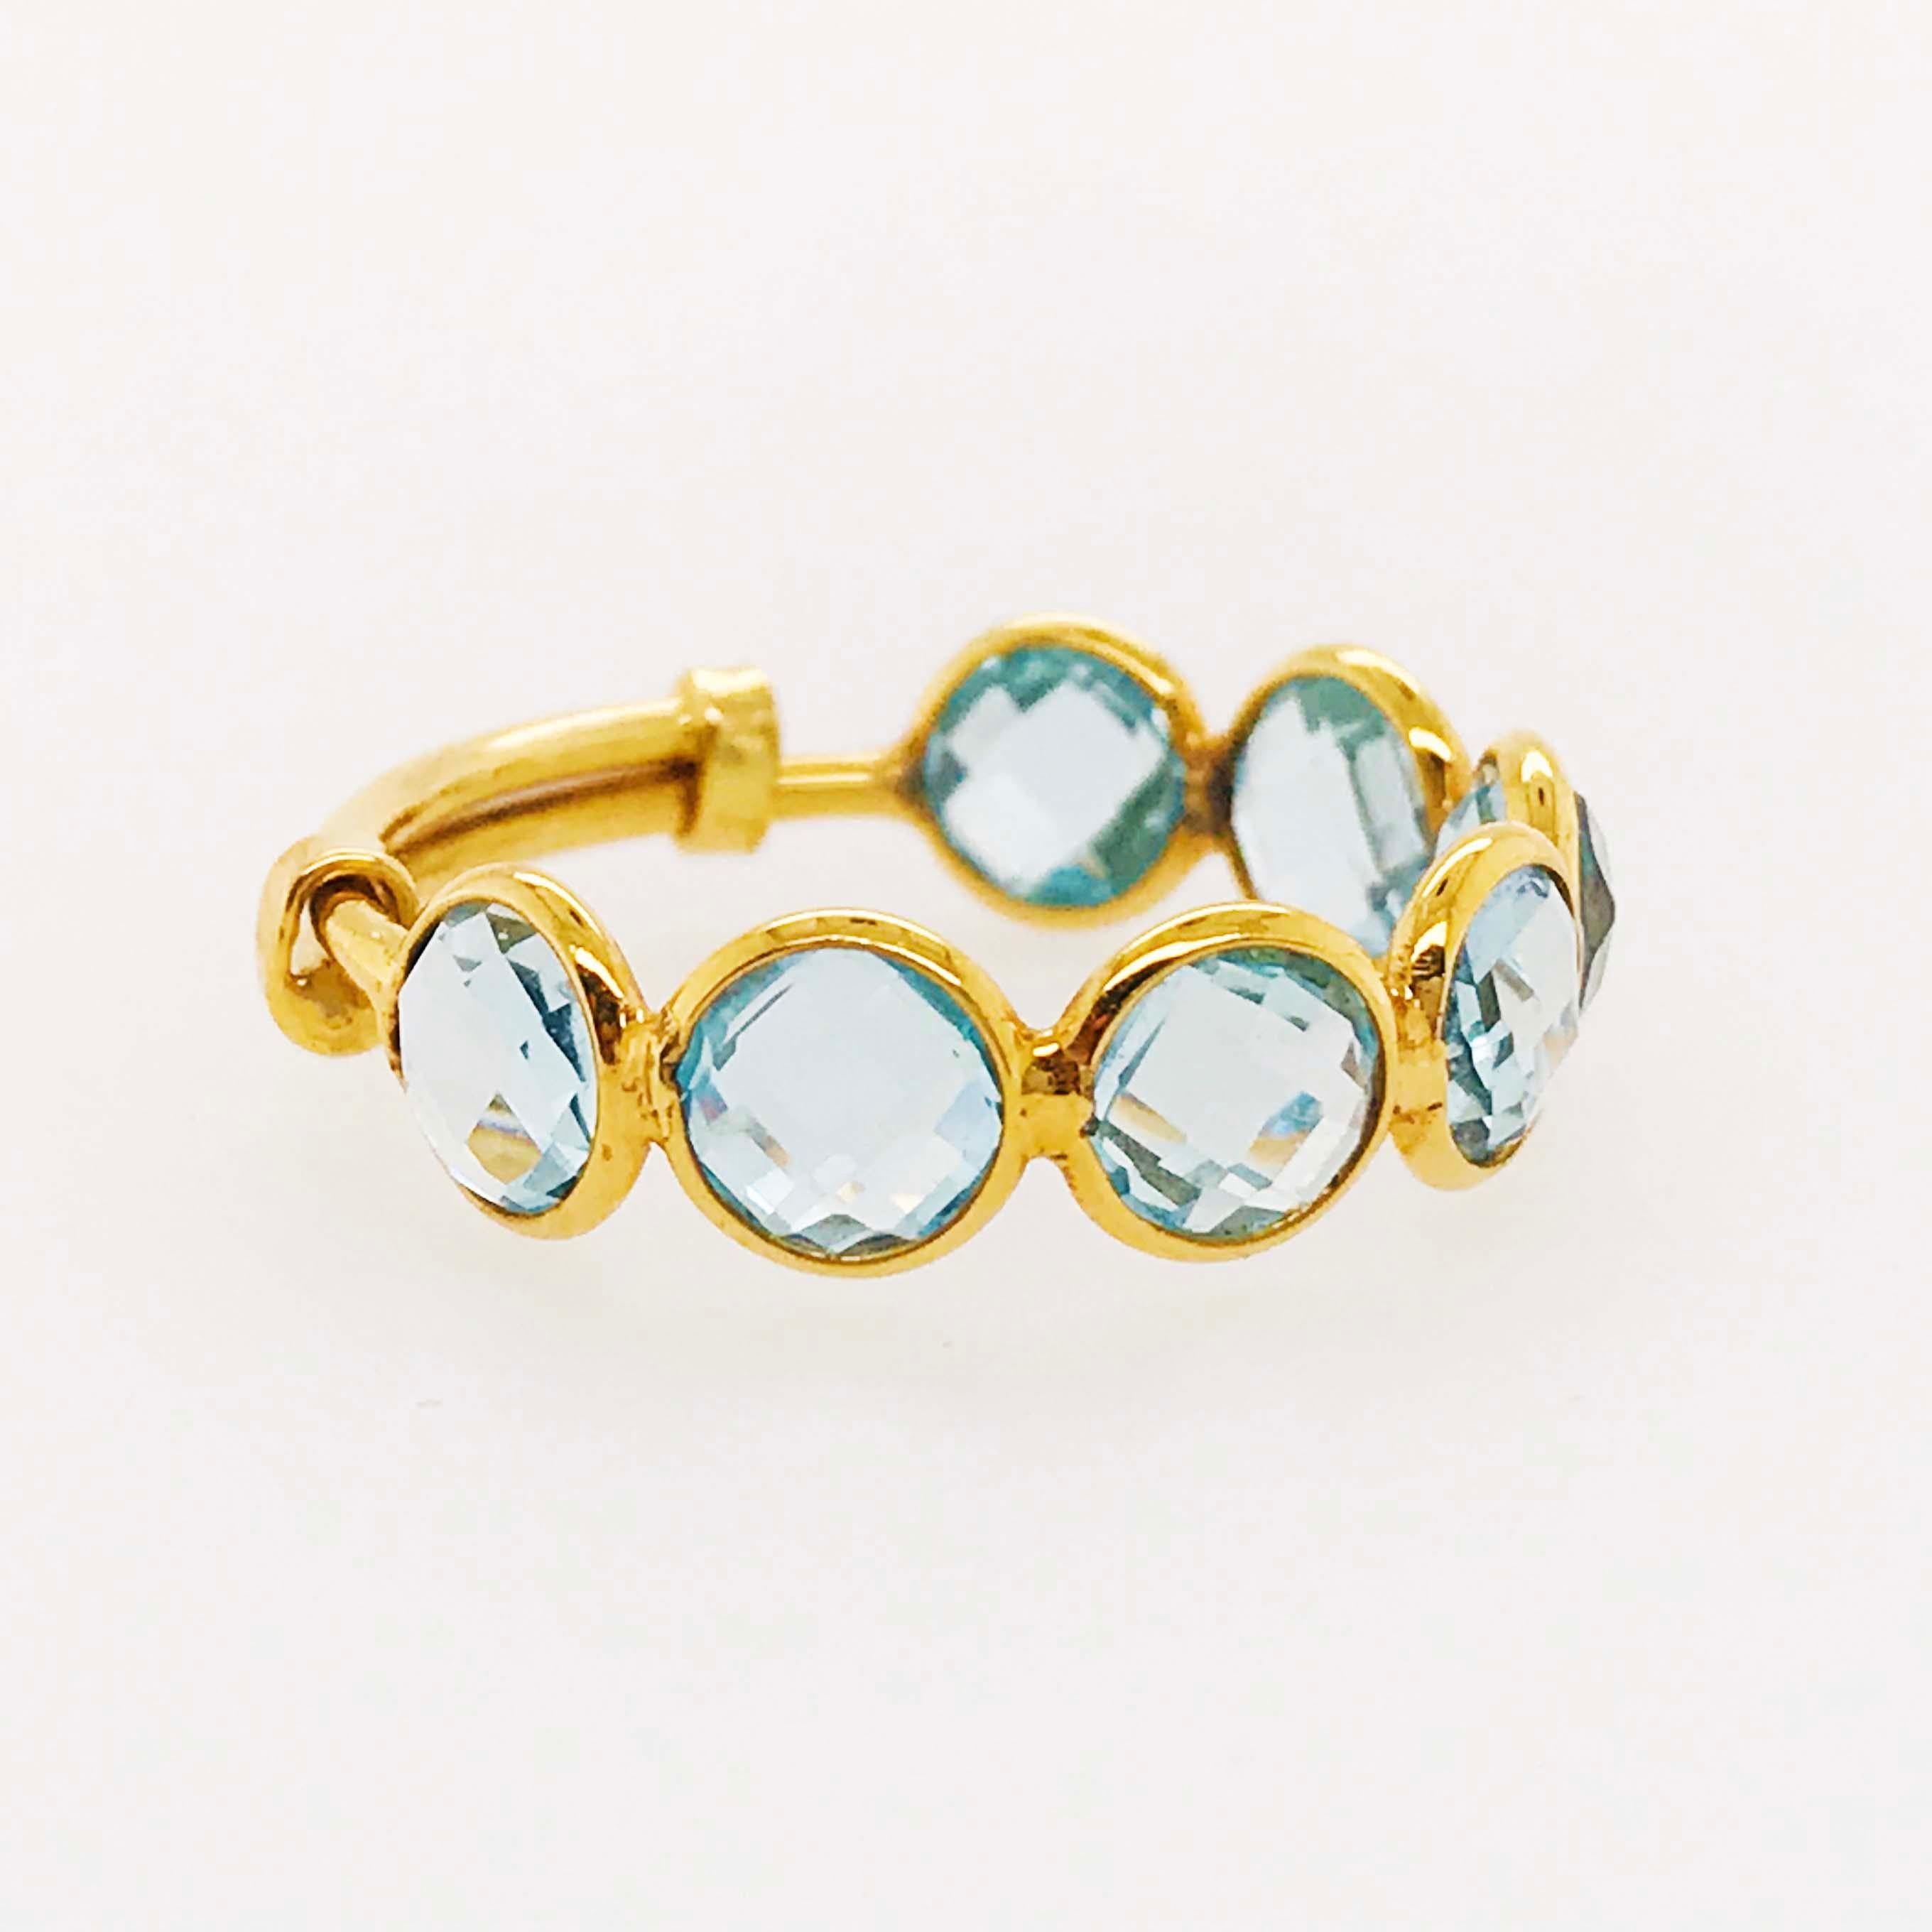 Blue Topaz Ring, Adjustable Ring in 18 Karat Gold 4 Carat Blue Topaz Gemstone 1